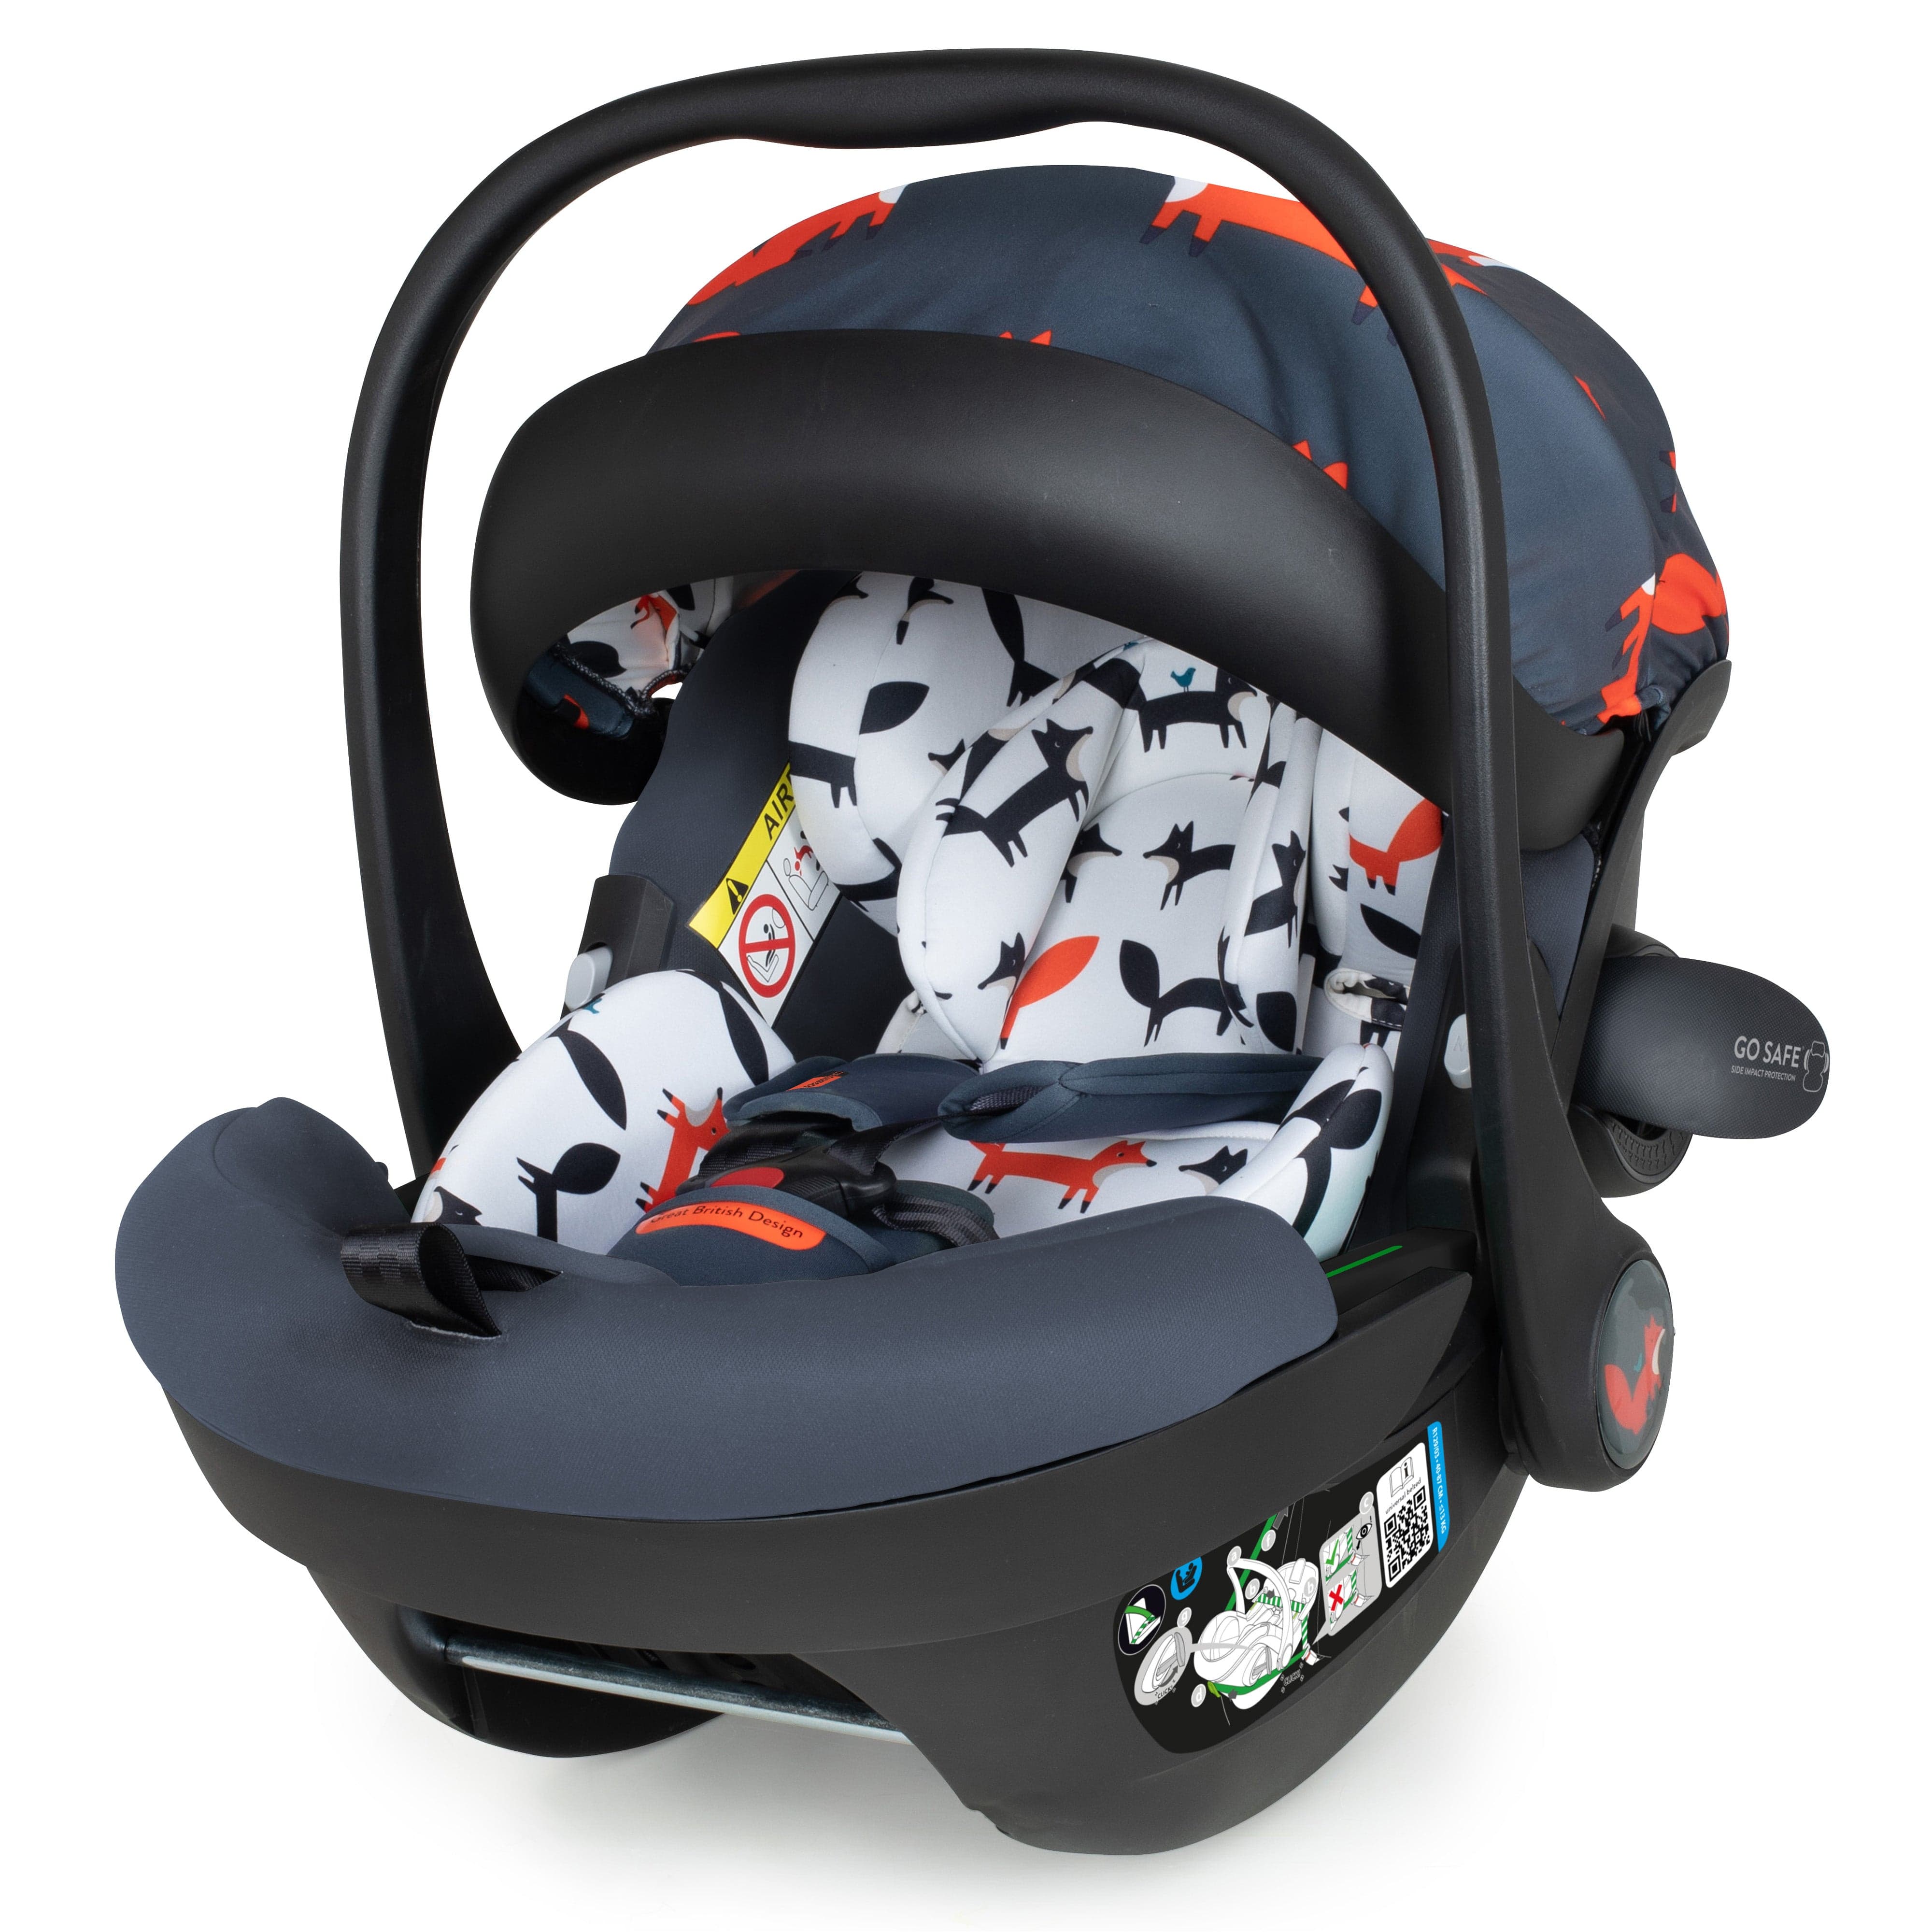 Cosatto baby car seats Cosatto Acorn i-Size Car Seat Charcoal Mister Fox CT5231